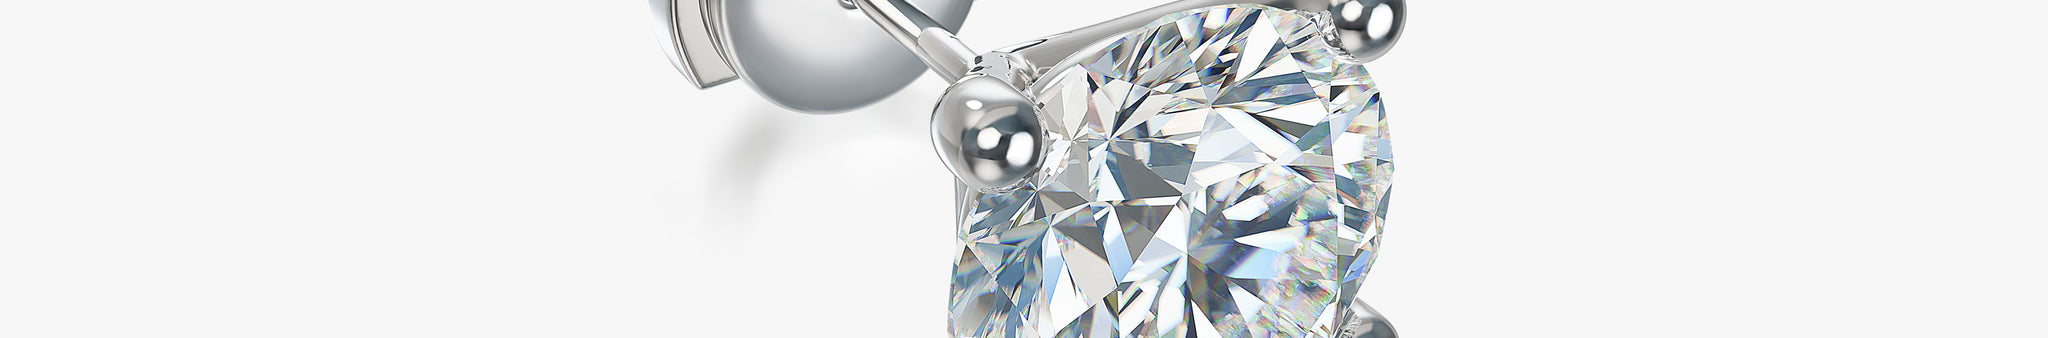 J'EVAR 18KT White Gold ALTR Lab Grown Diamond Stud Earrings with Guardian Backs Lock View